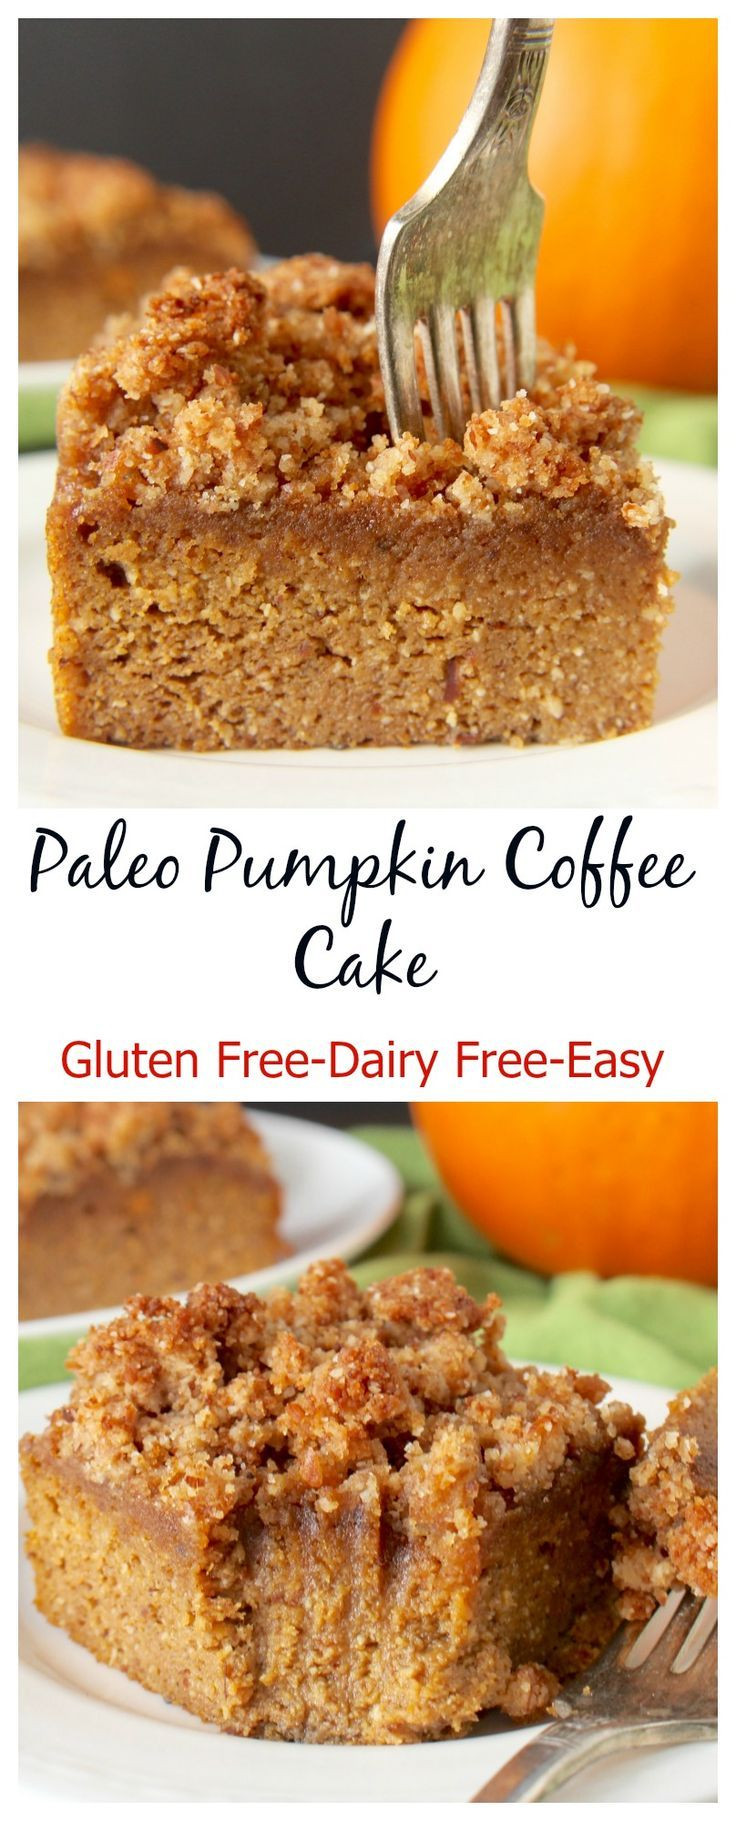 Gluten Free Dairy Free Pumpkin Recipes
 Paleo Pumpkin Coffee Cake Gluten Free Grain Free Dairy